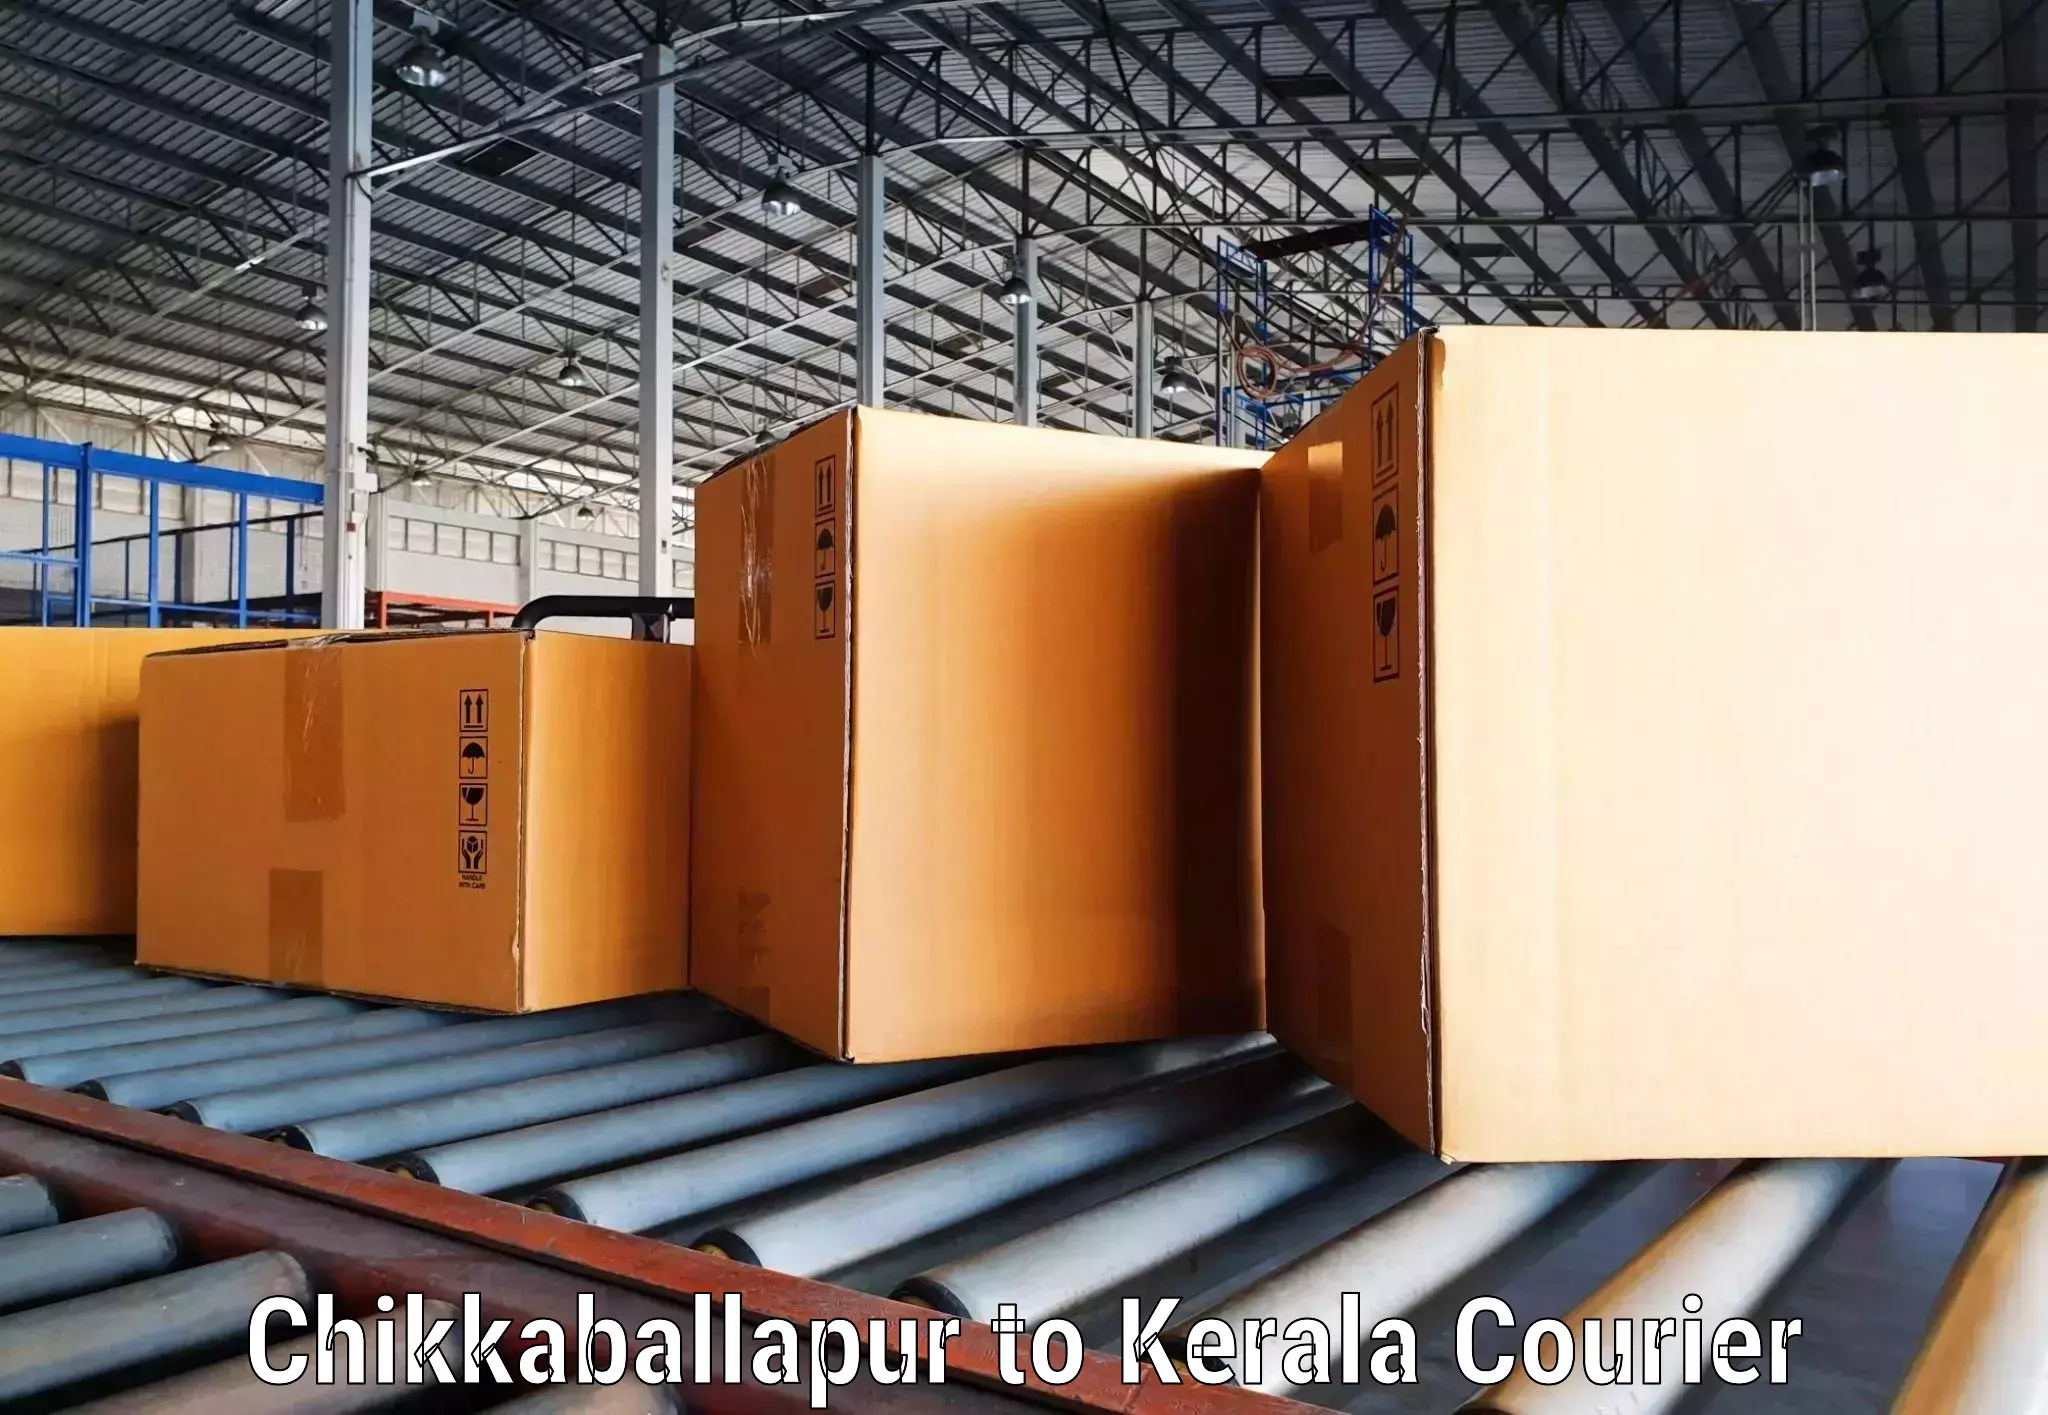 Flexible delivery schedules Chikkaballapur to Kochi